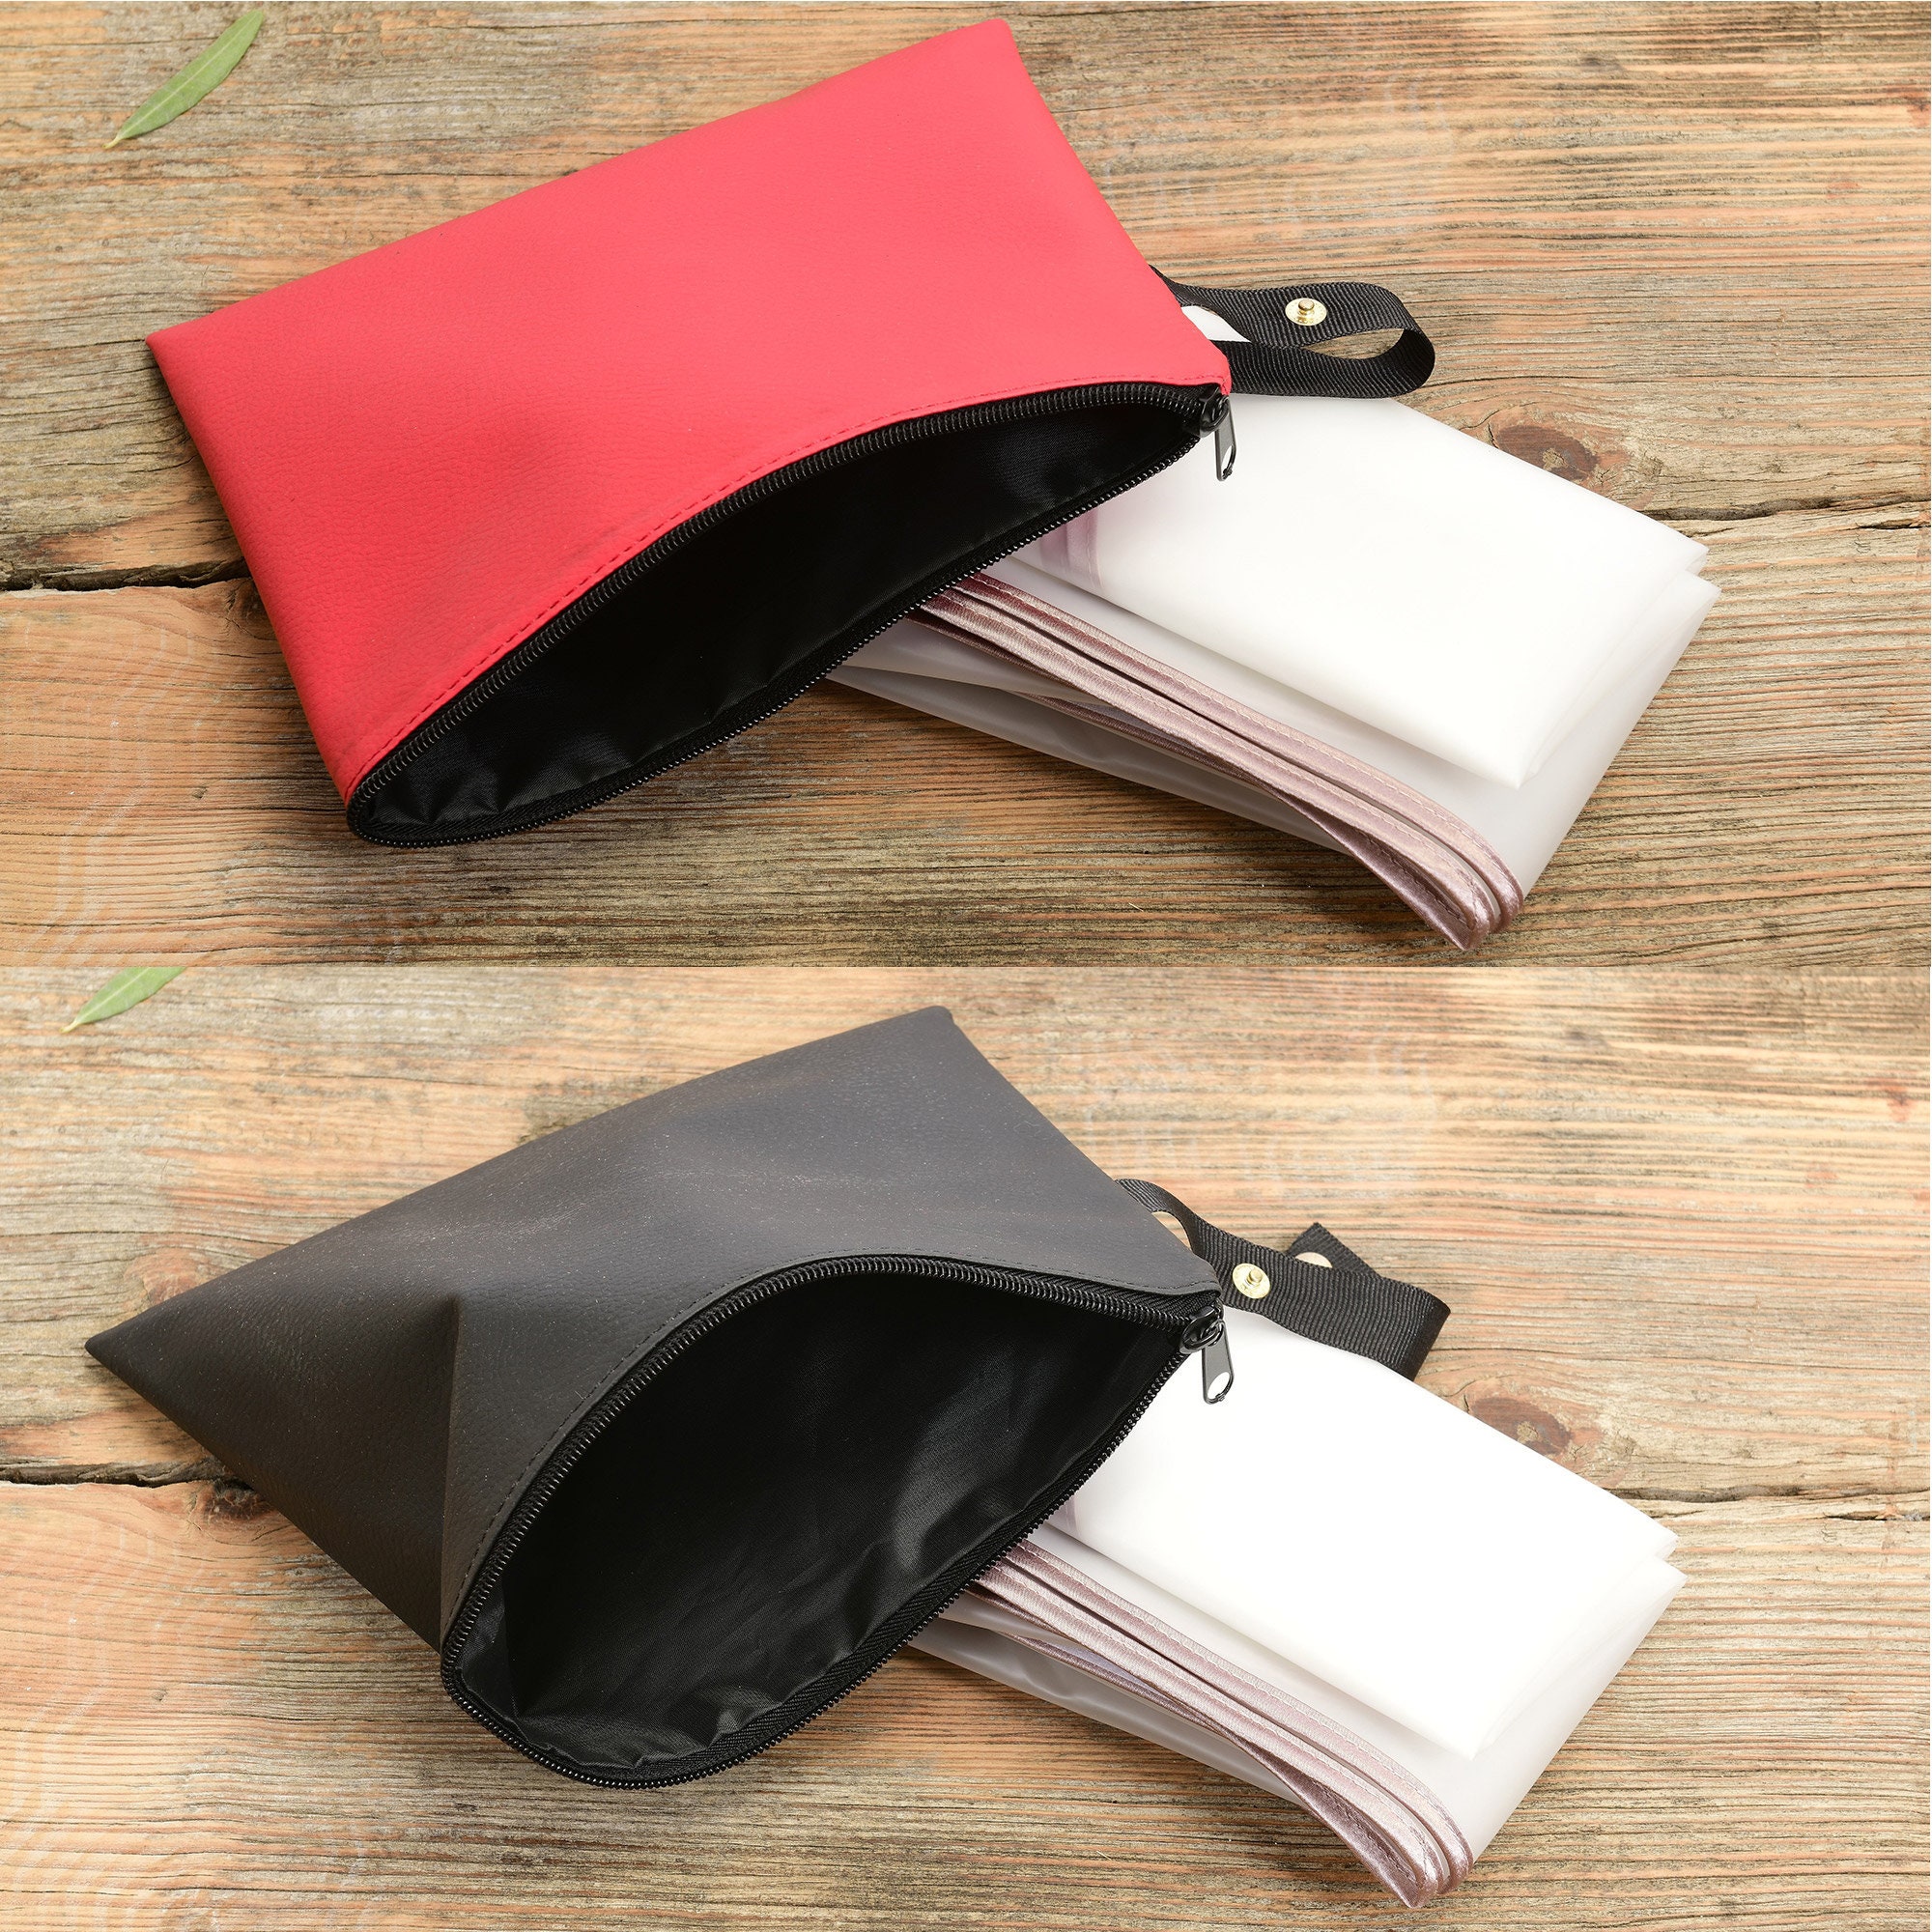 Bag Raincoat in Clear Color Handbag Rain Slicker for Designer